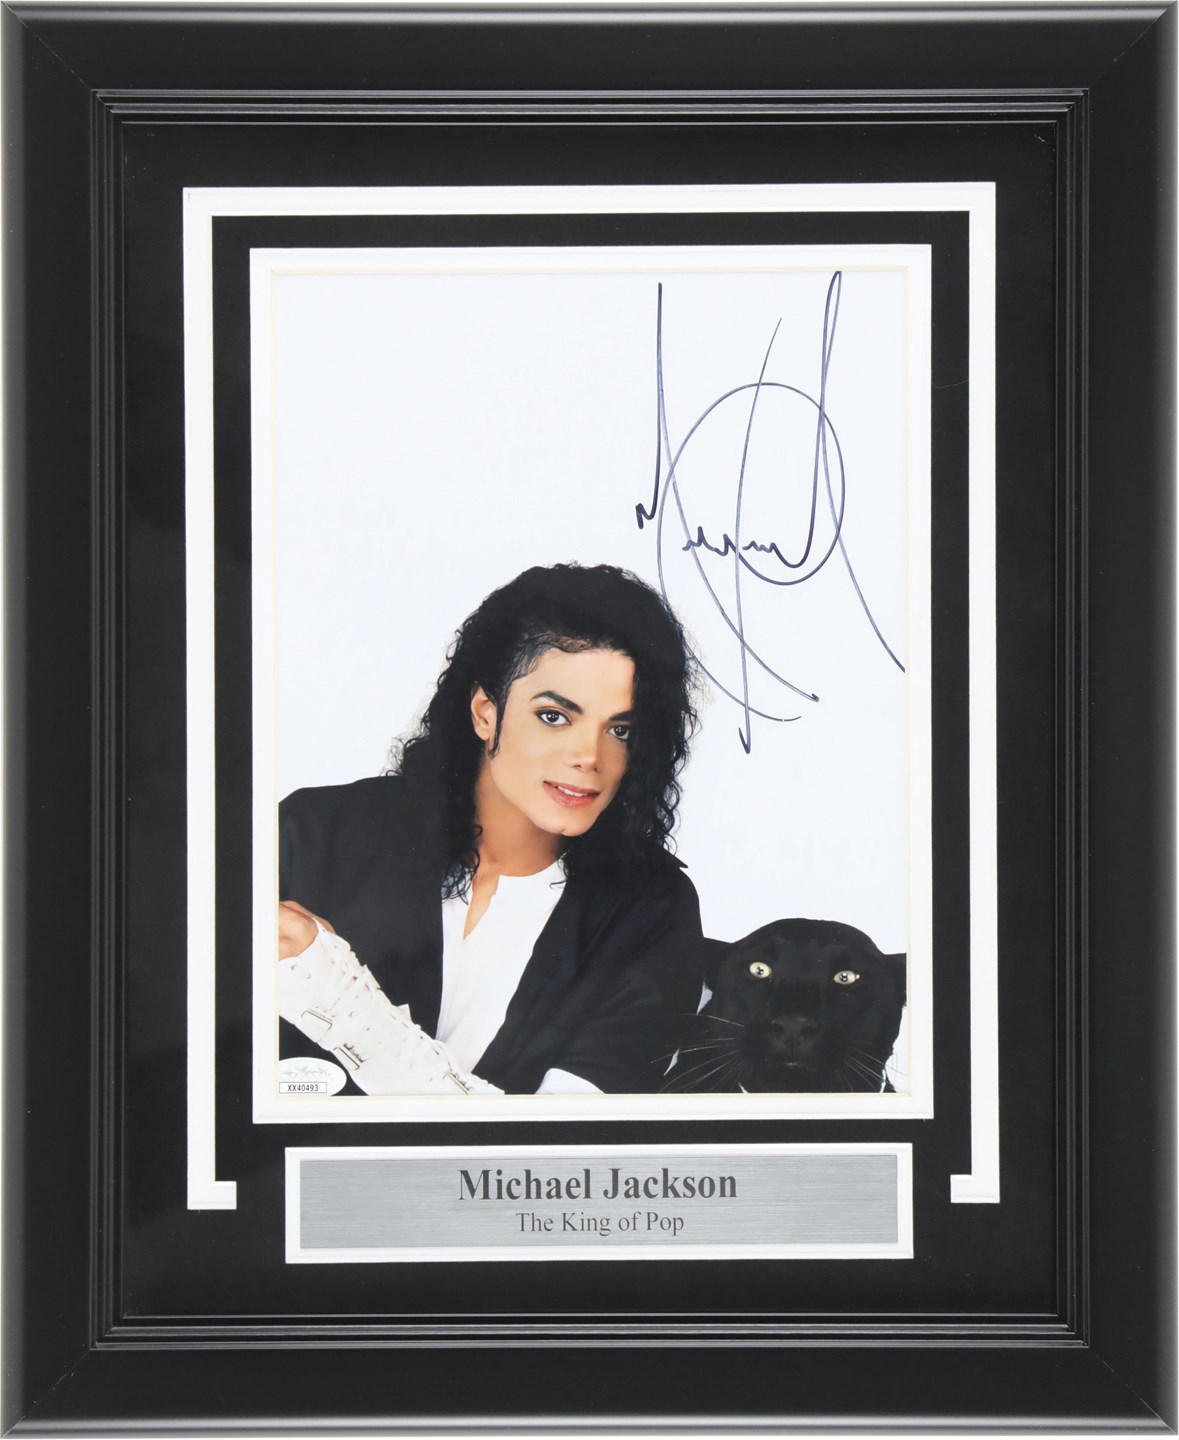 - Michael Jackson Signed Photograph (JSA)